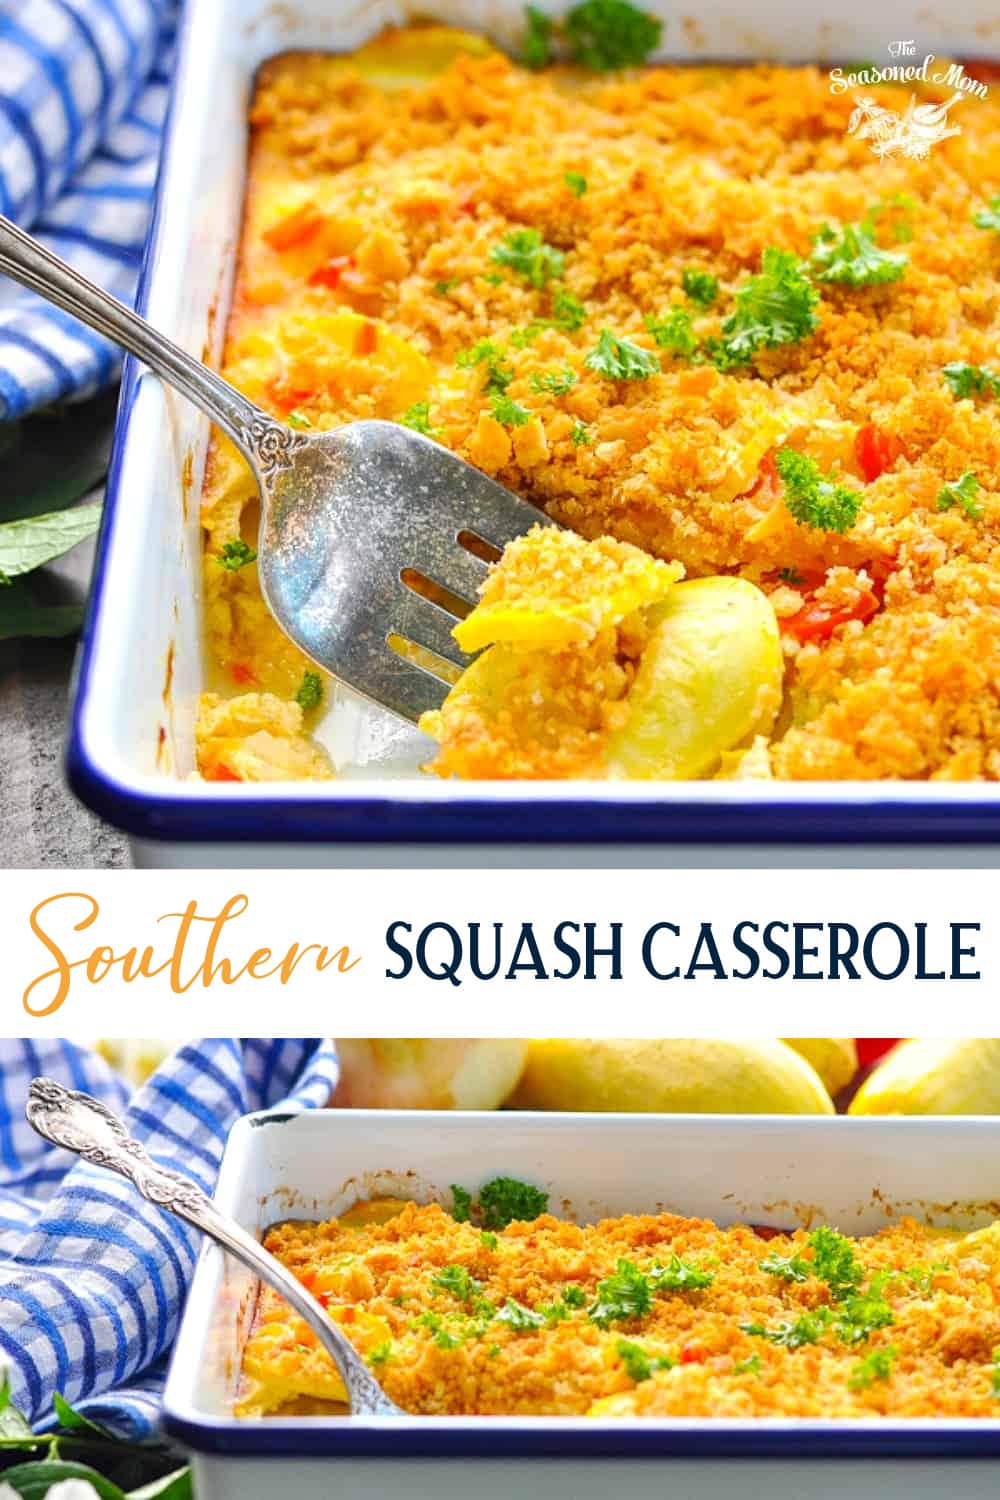 Southern Squash Casserole - The Seasoned Mom